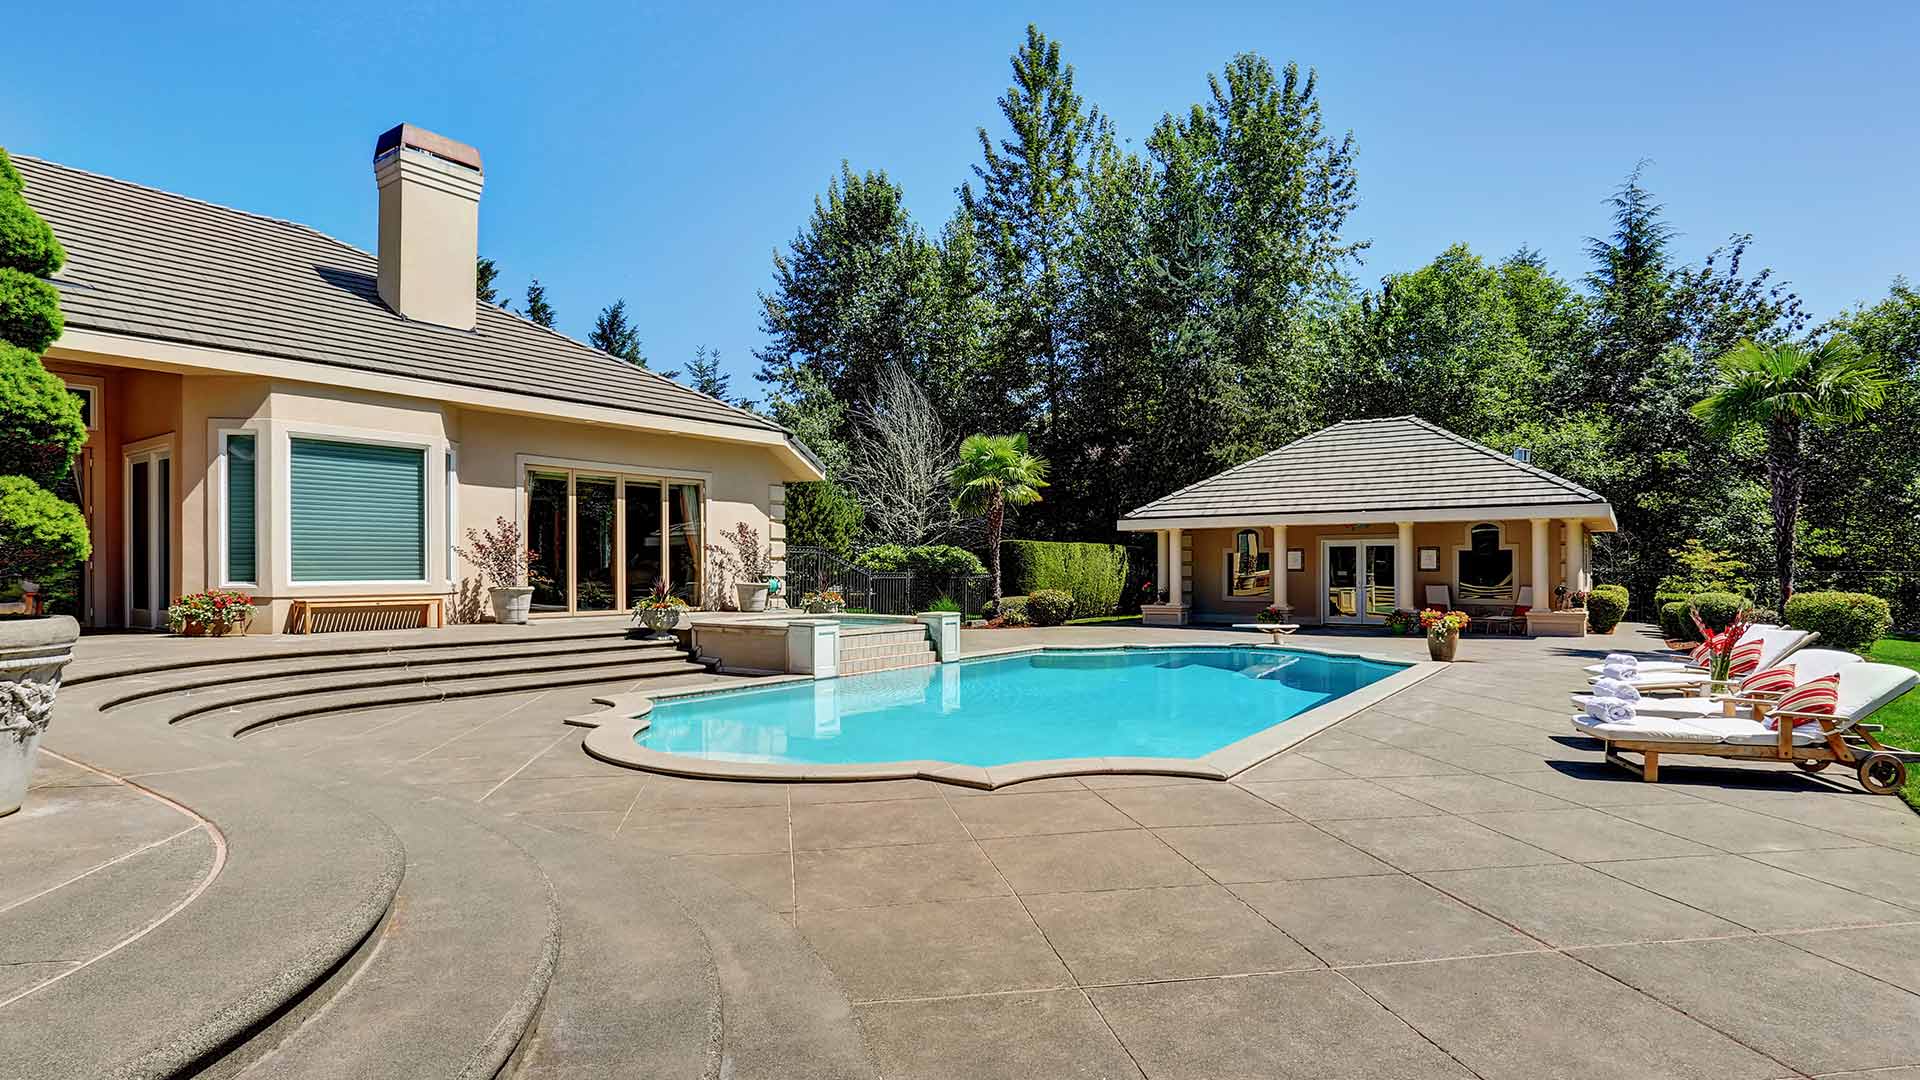 inground pool in backyard with stone walkways